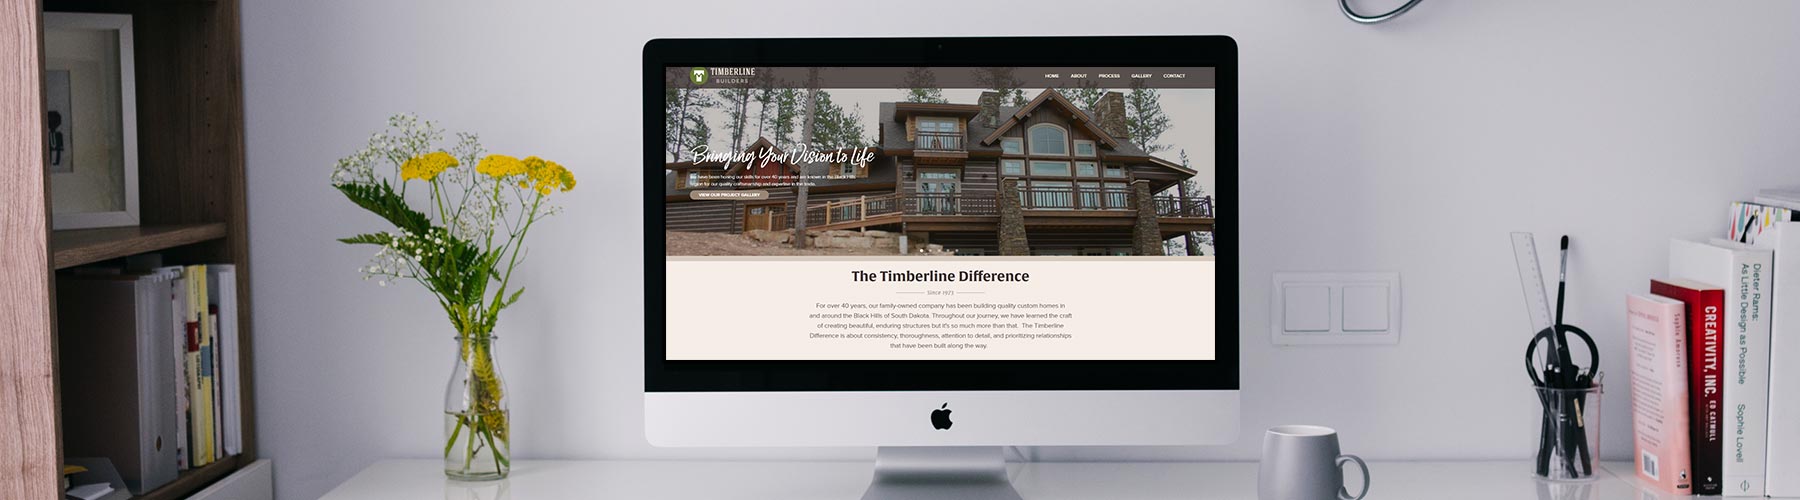 Digital Designs web design example showing website on desktop monitor